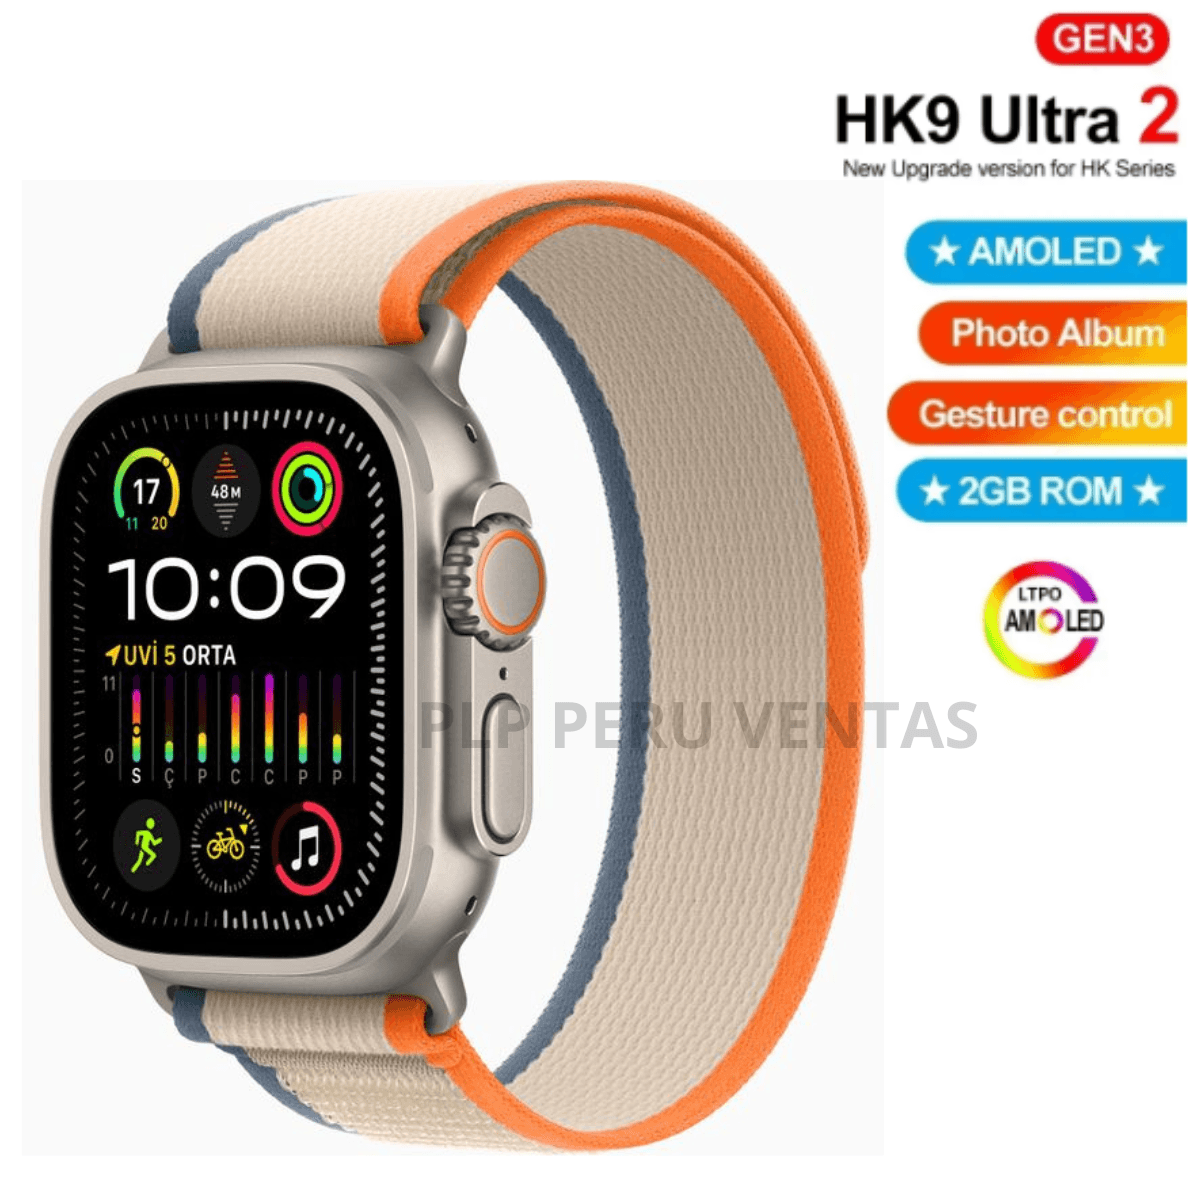 Smartwatch Hk9 Ultra 2 con Chat GPT 2GB Amoled Premiun